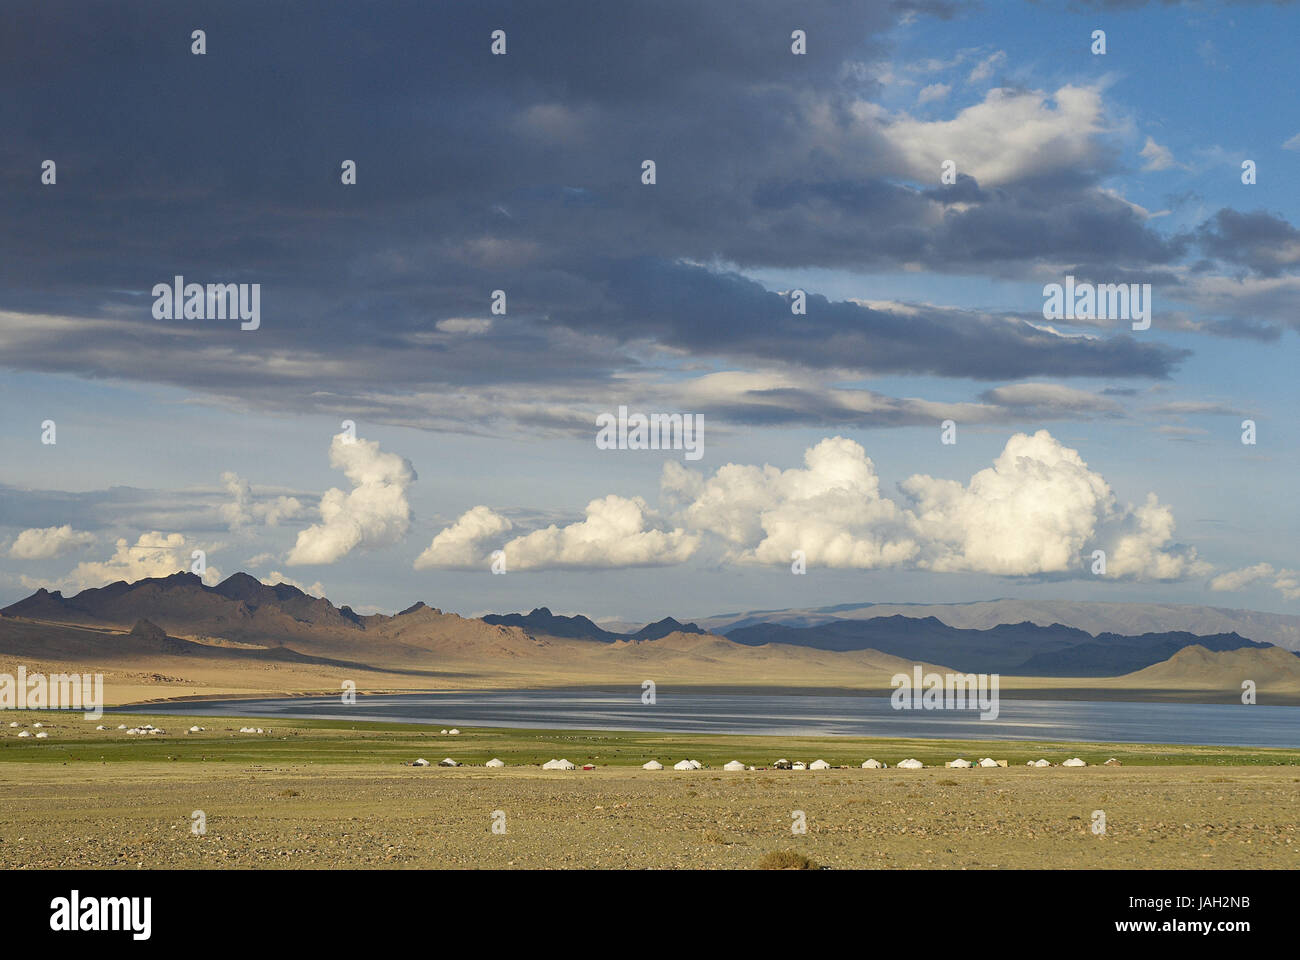 Mongolia,estrema provincia occidentale,Bayan Olgii provincia,Tsambagarav parco nazionale,Kasachen,nomad,supporto,Jurten, Foto Stock